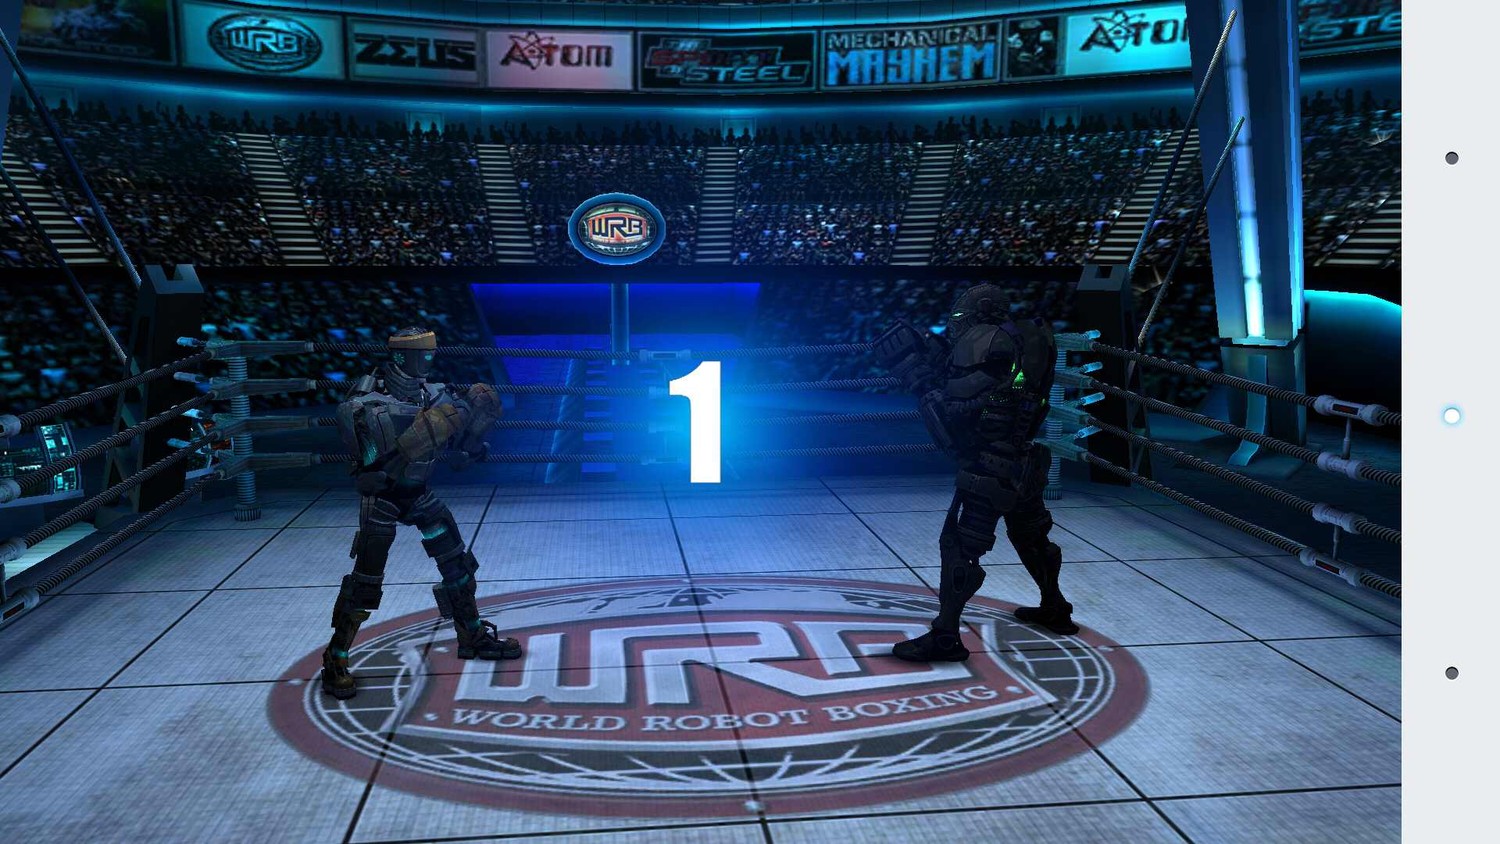 Real Steel World Robot Boxing - Скриншот 2